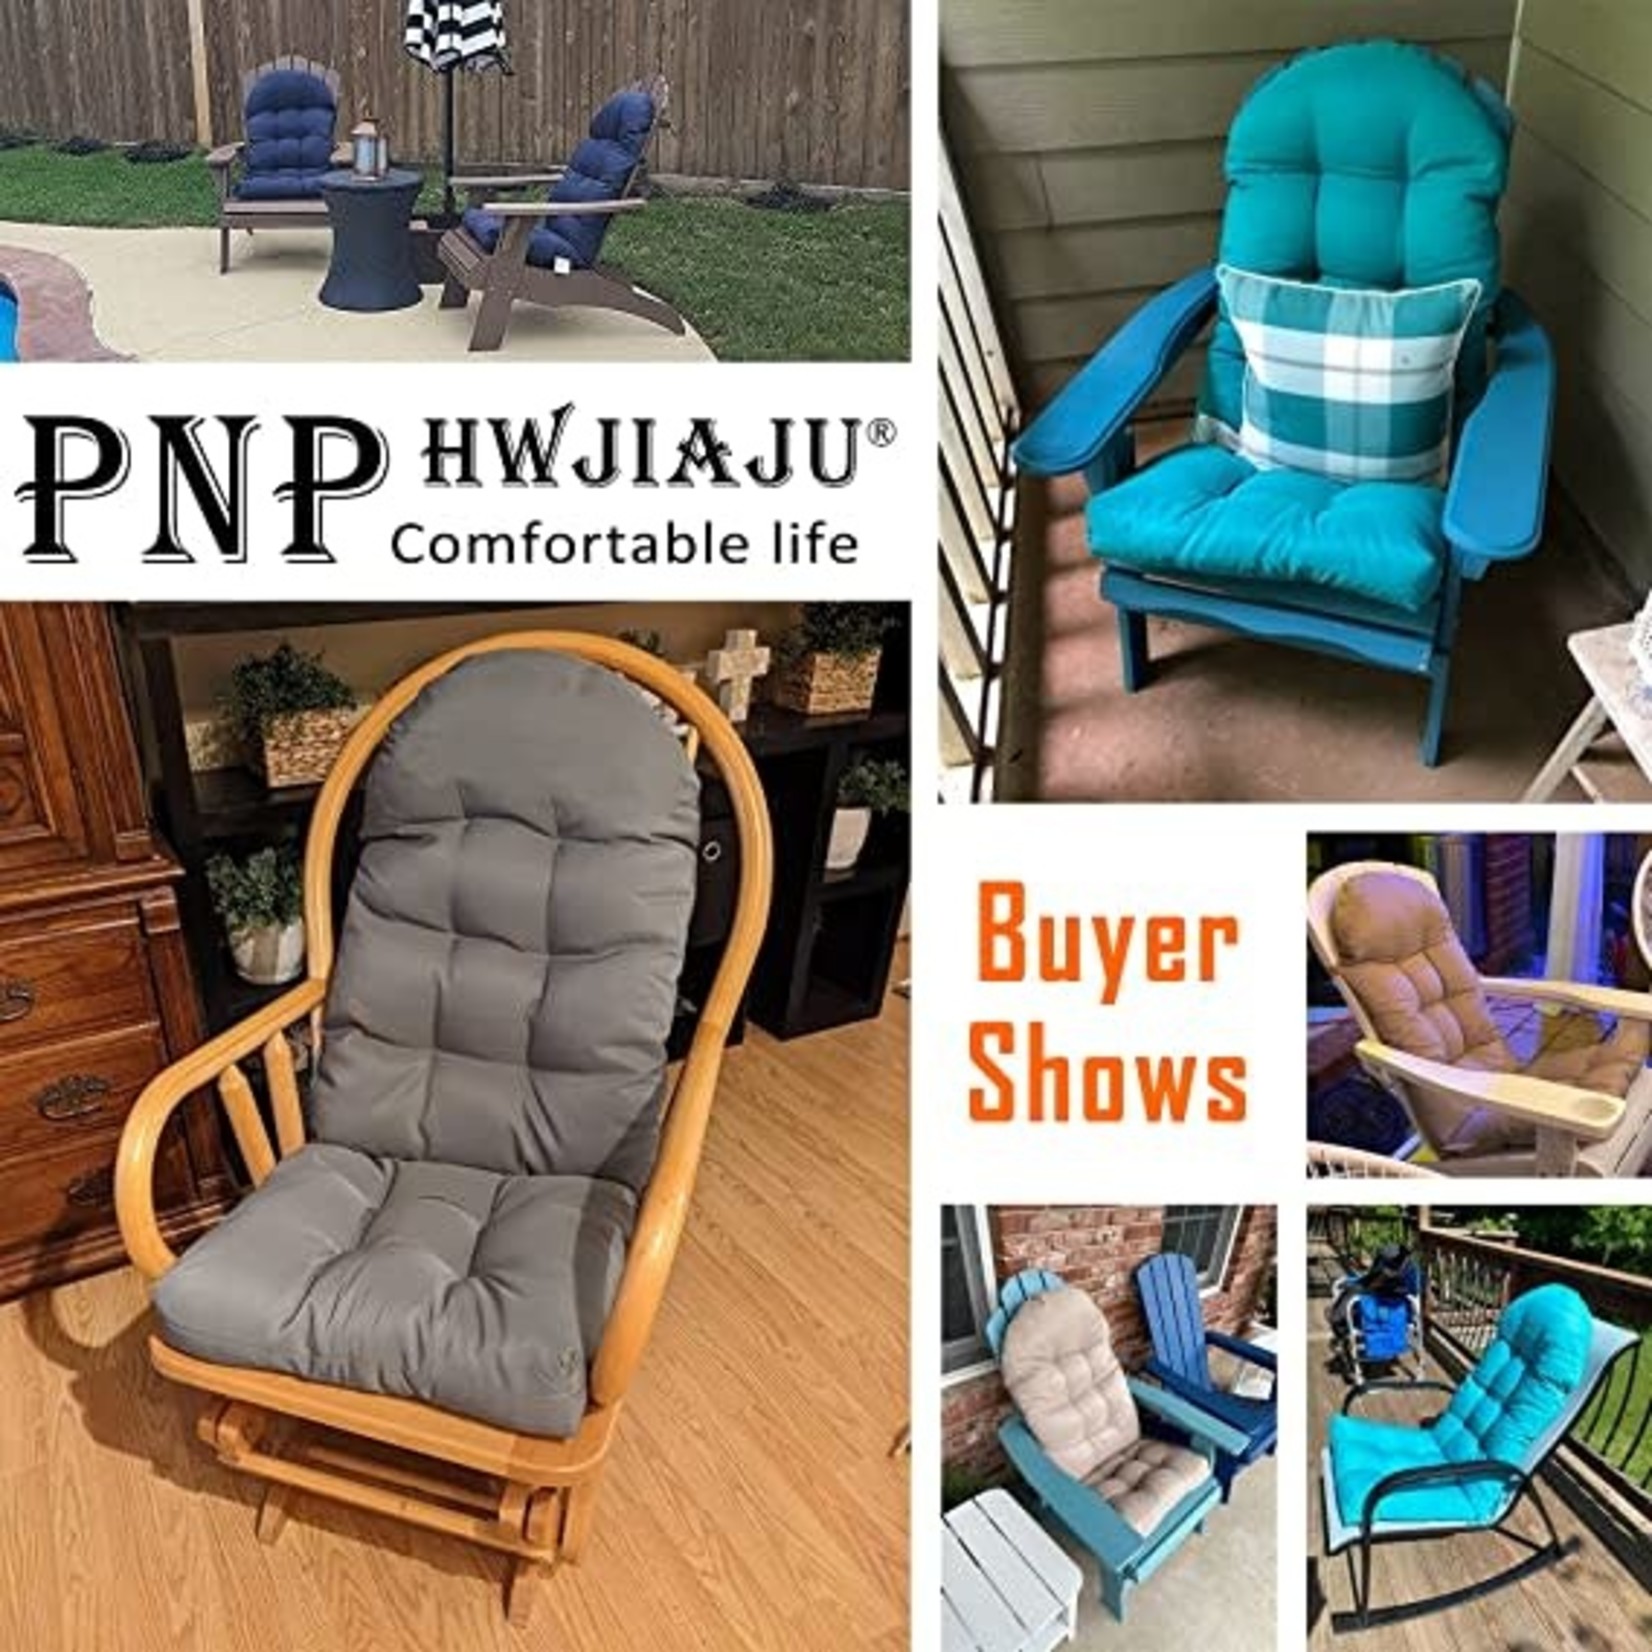 https://cdn.shoplightspeed.com/shops/654658/files/52405913/1652x1652x1/pnp-hwjiaju-chair-cushion-high-back-beige.jpg